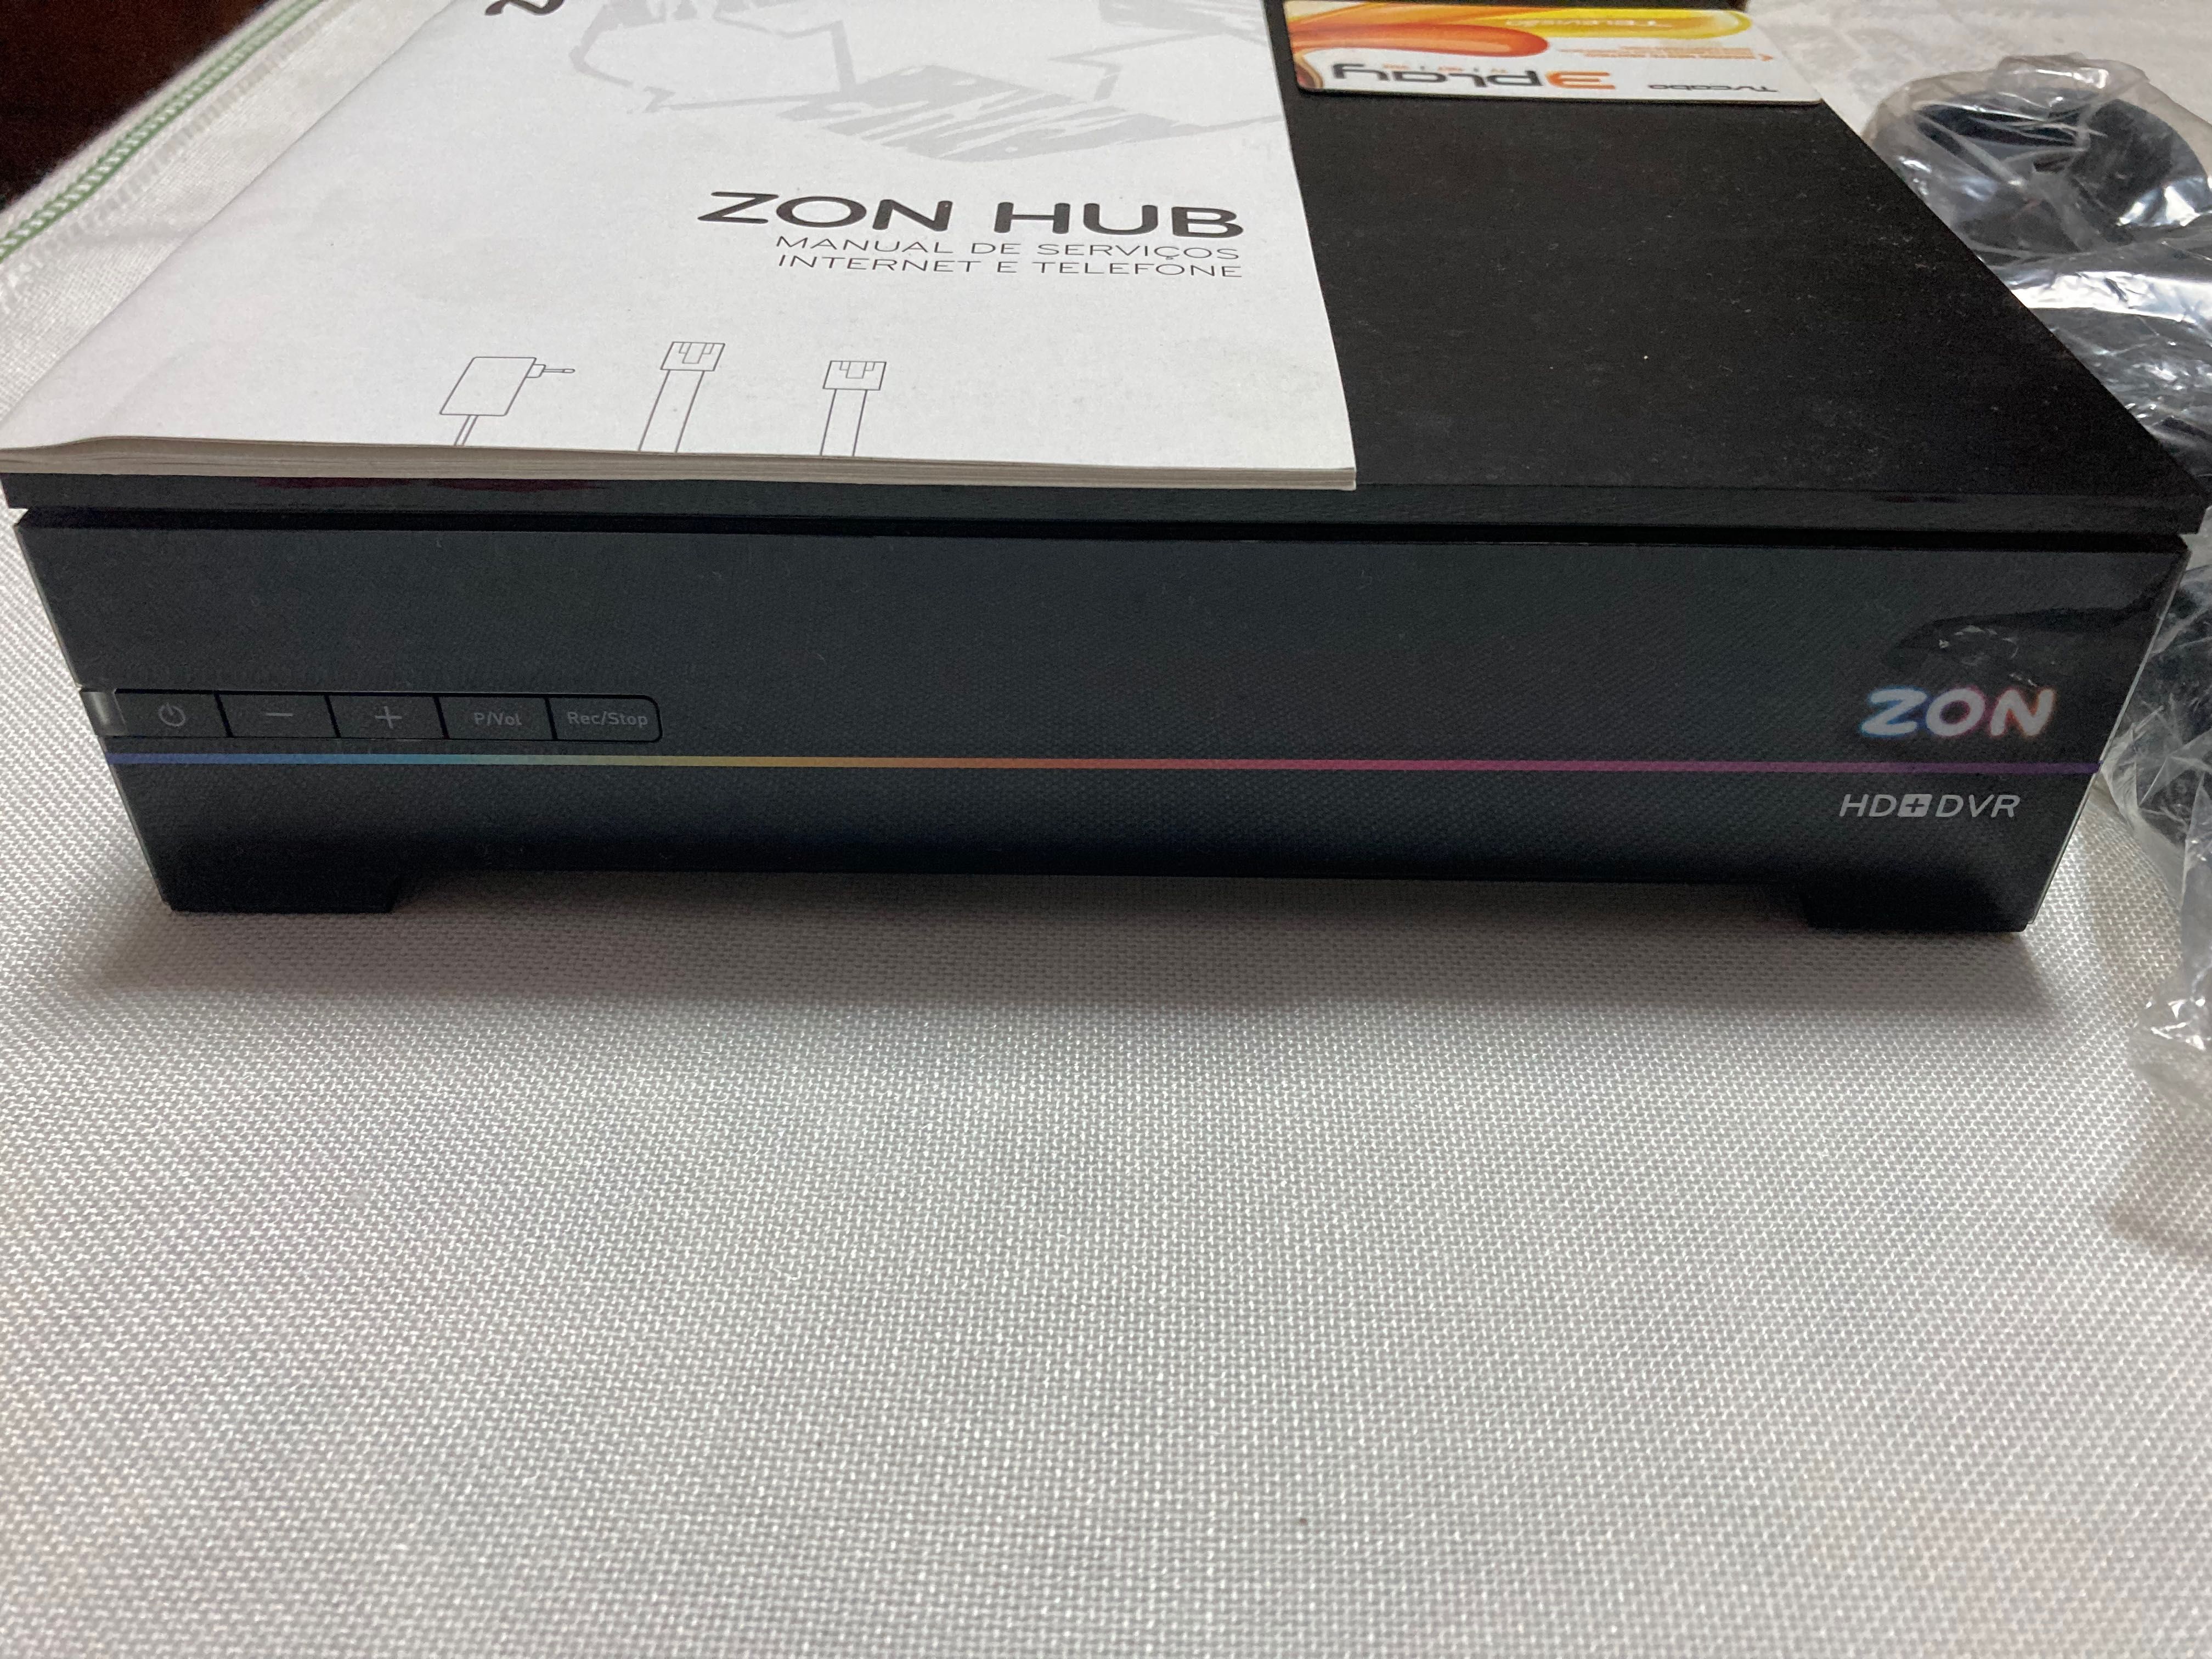 Box hub HD+DVR Model DCR 8151/24